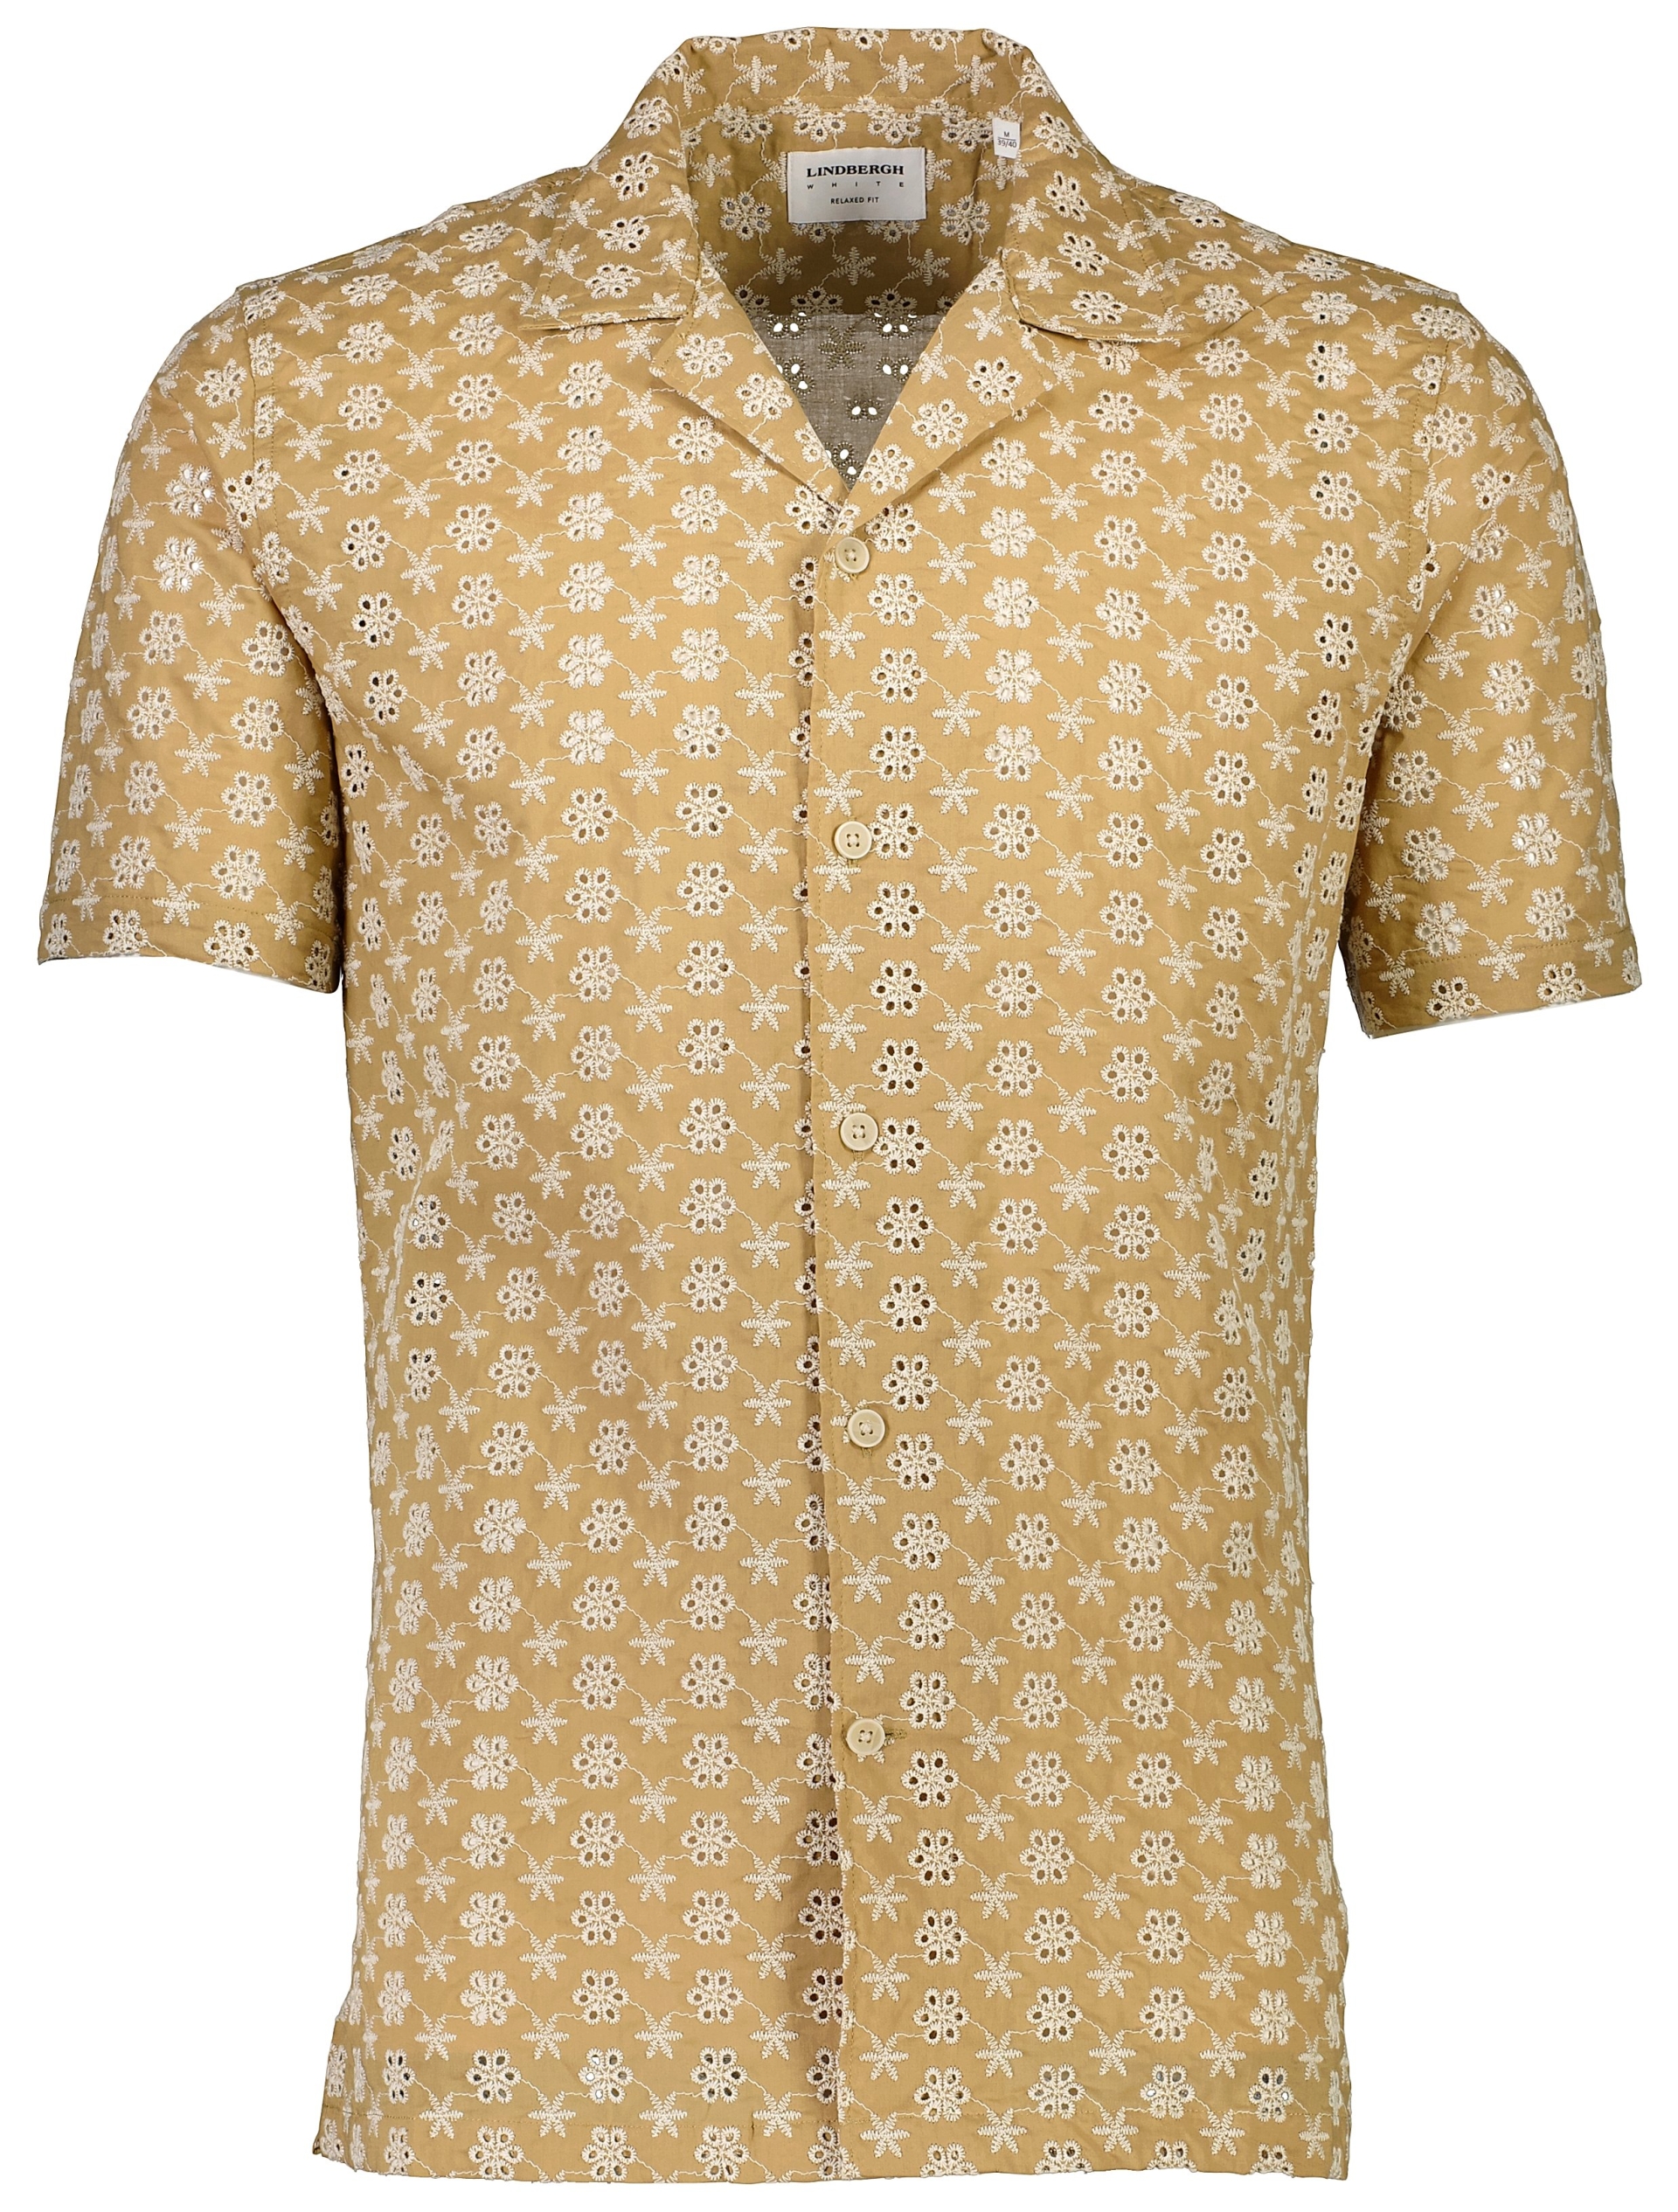 Lindbergh Casual shirt brown / camel